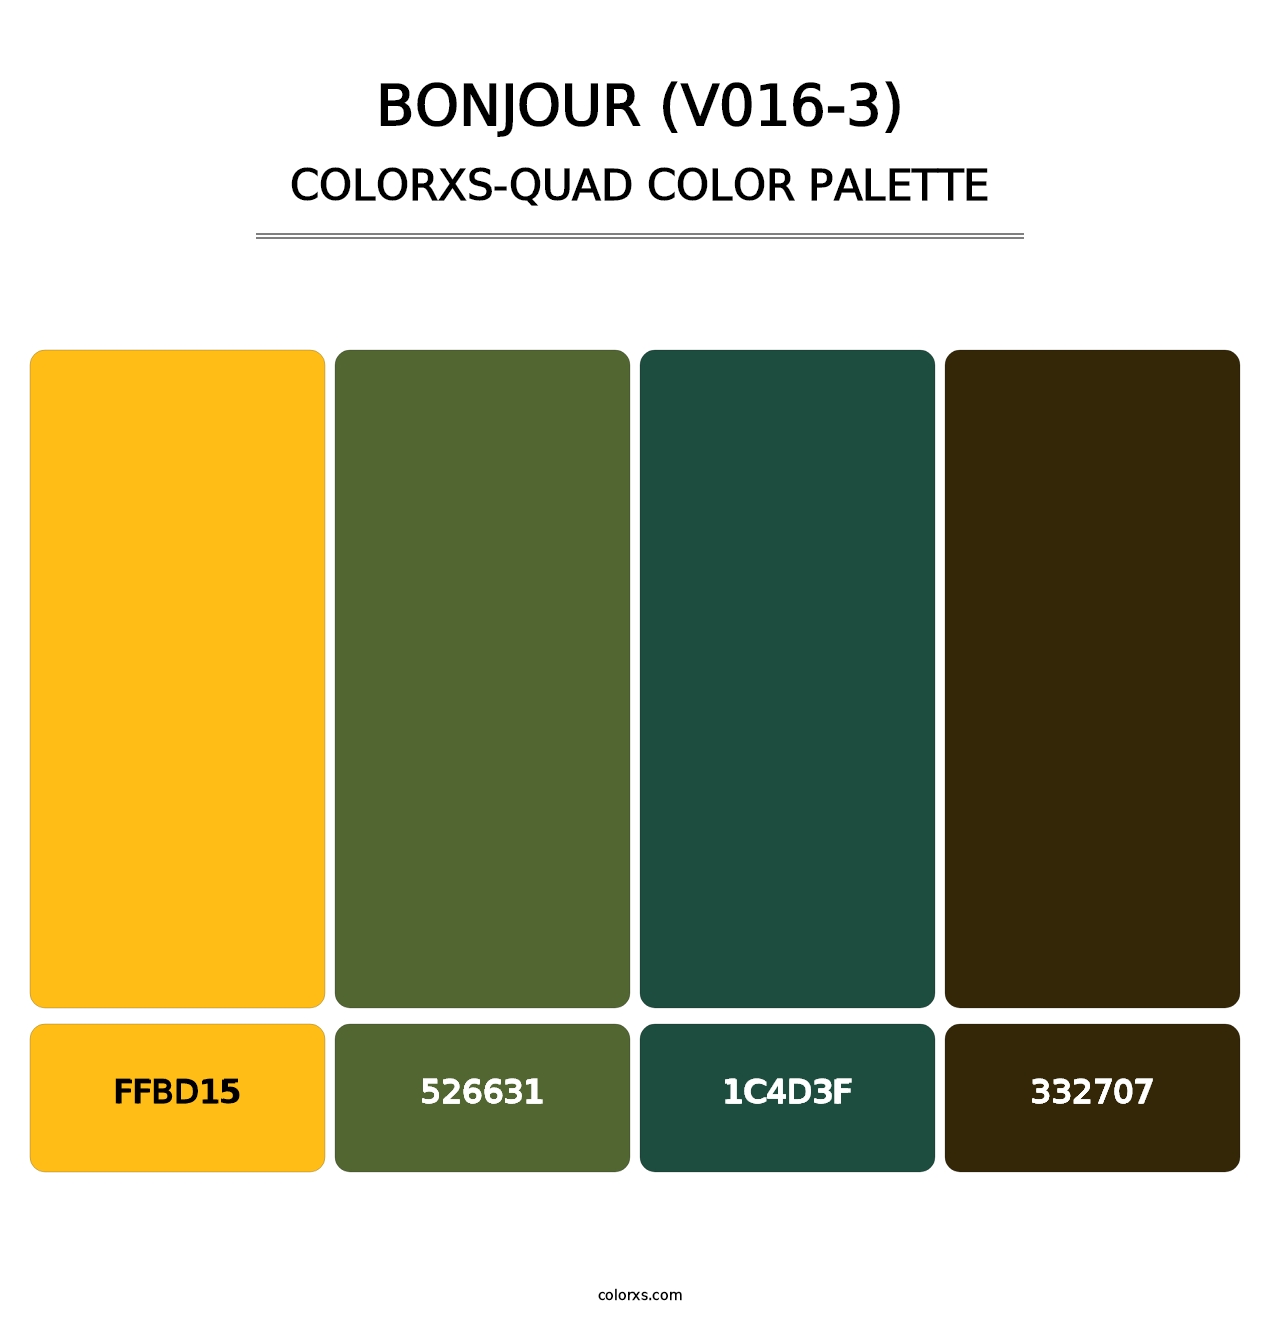 Bonjour (V016-3) - Colorxs Quad Palette